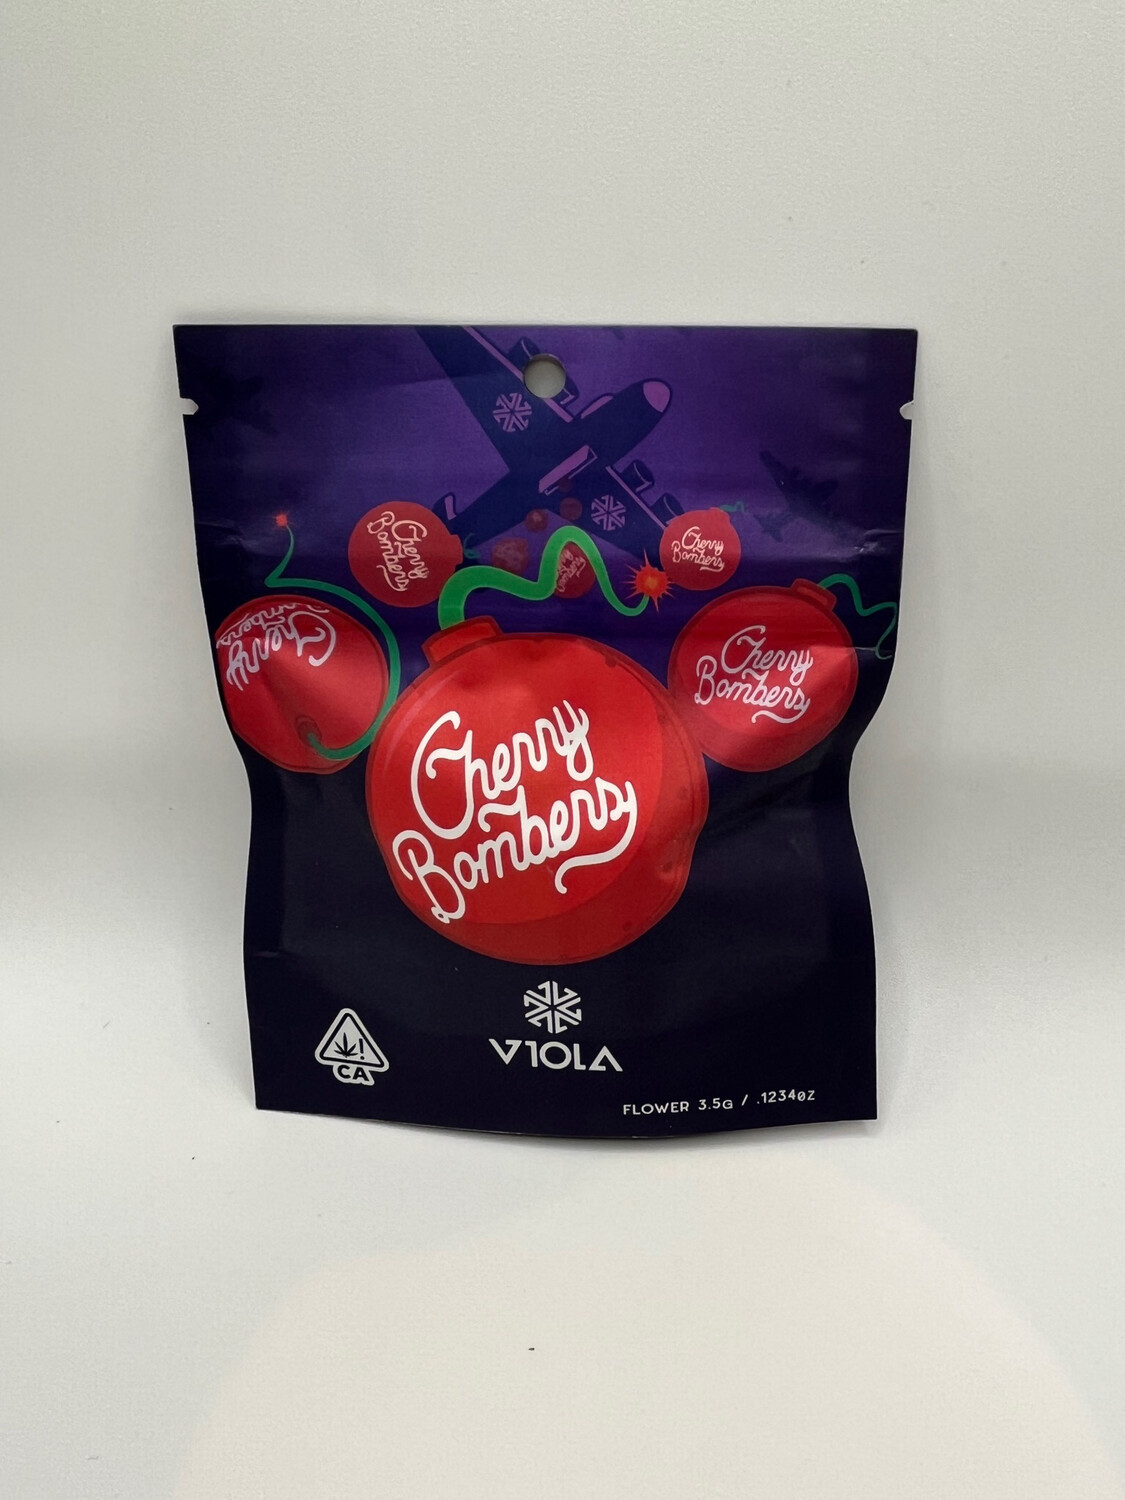 Viola Cherry Bomberry Art Gift